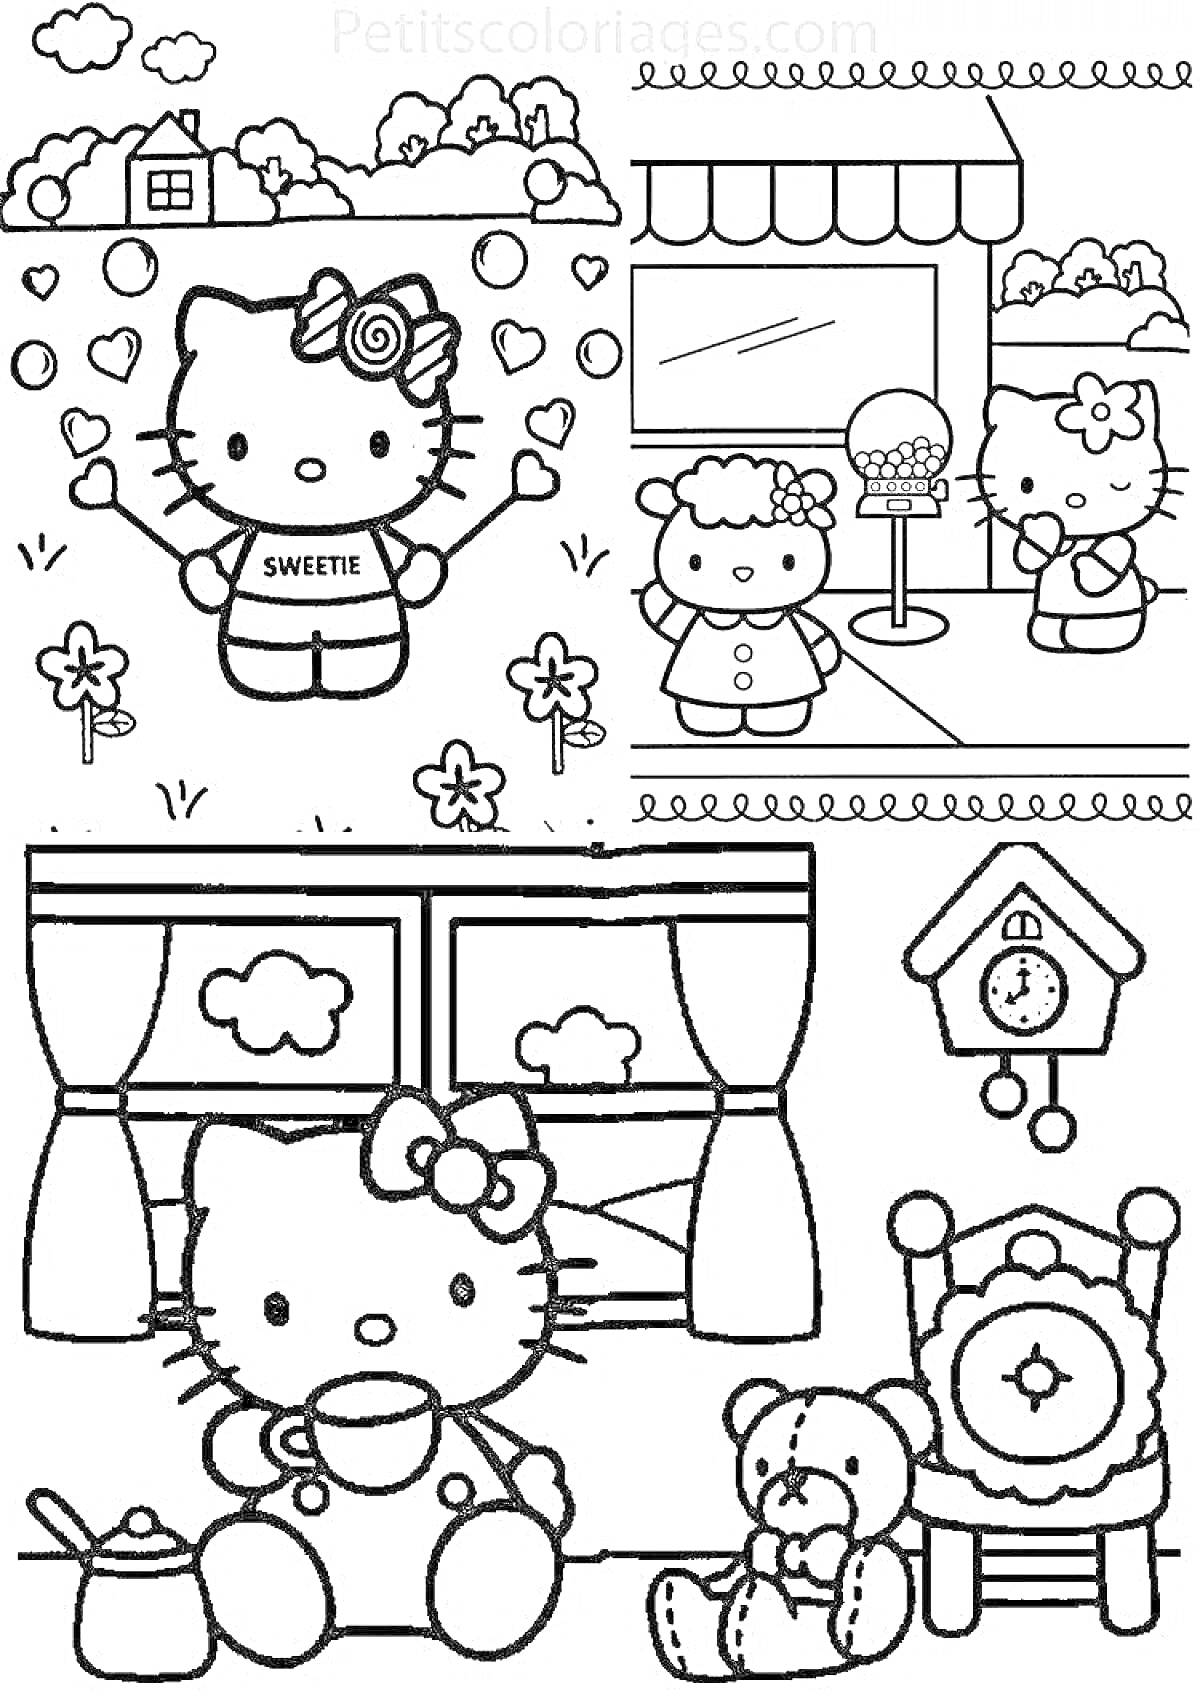 На раскраске изображено: Hello Kitty, Одежда, Дом, Часы, Трава, Цветы, Деревня, Кресло, Чай, Кукла, Буквы, Кружки, Плюшевый медведь, Улицы